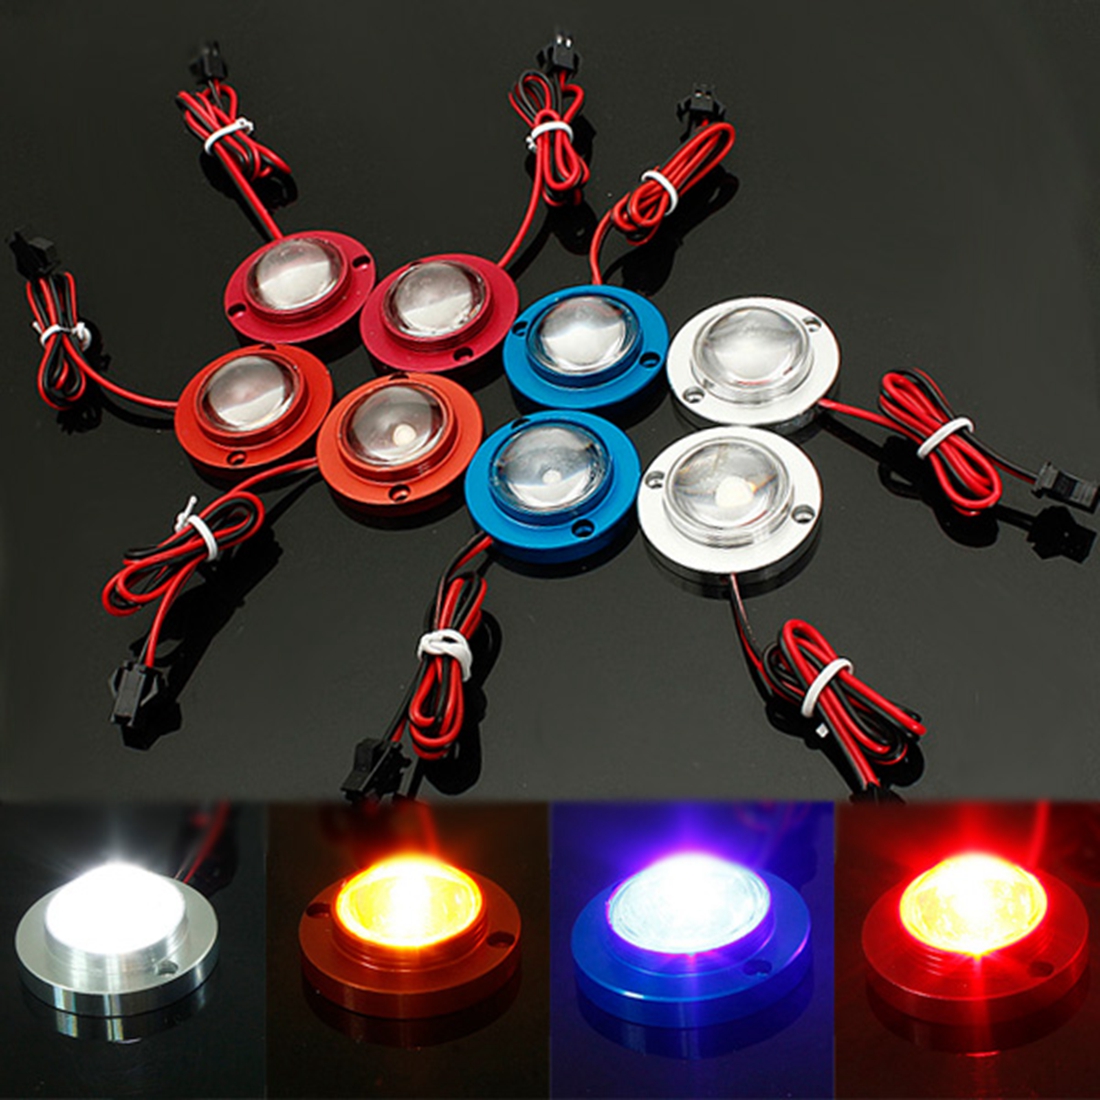 10W-LED-Strobe-Flash-Lights-Emergency-Brake-Tail-Lamp-12V-2PCS-for-Car-Motor-Bicycle-1004582